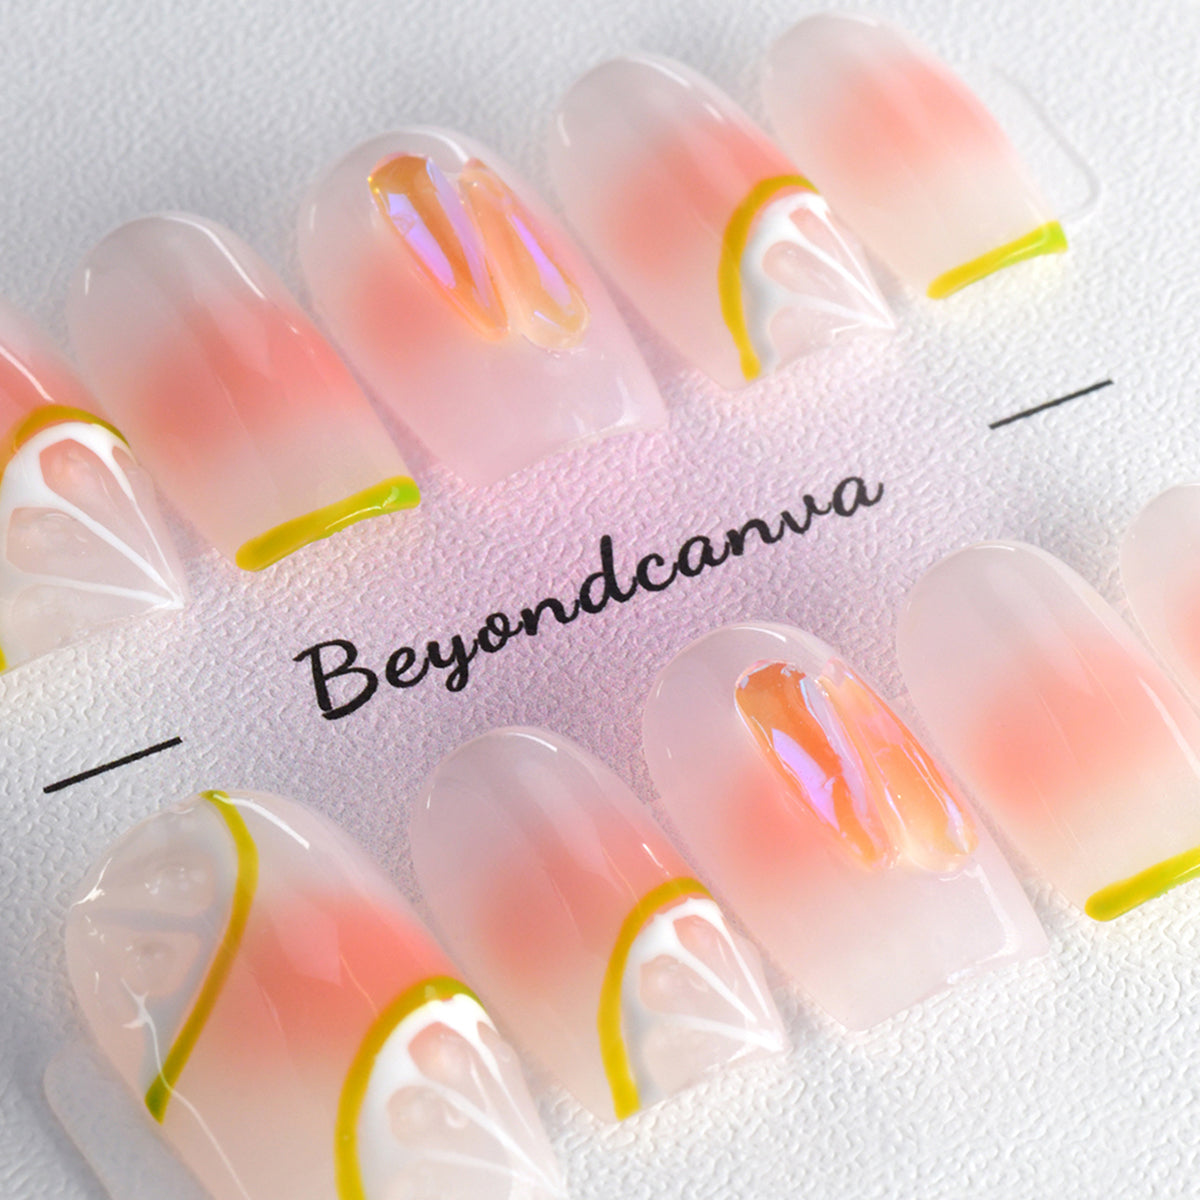 Glossy Pink Acrylic Medium Square Watermelon Design Handmade Press On Nails BEYONDCANVA